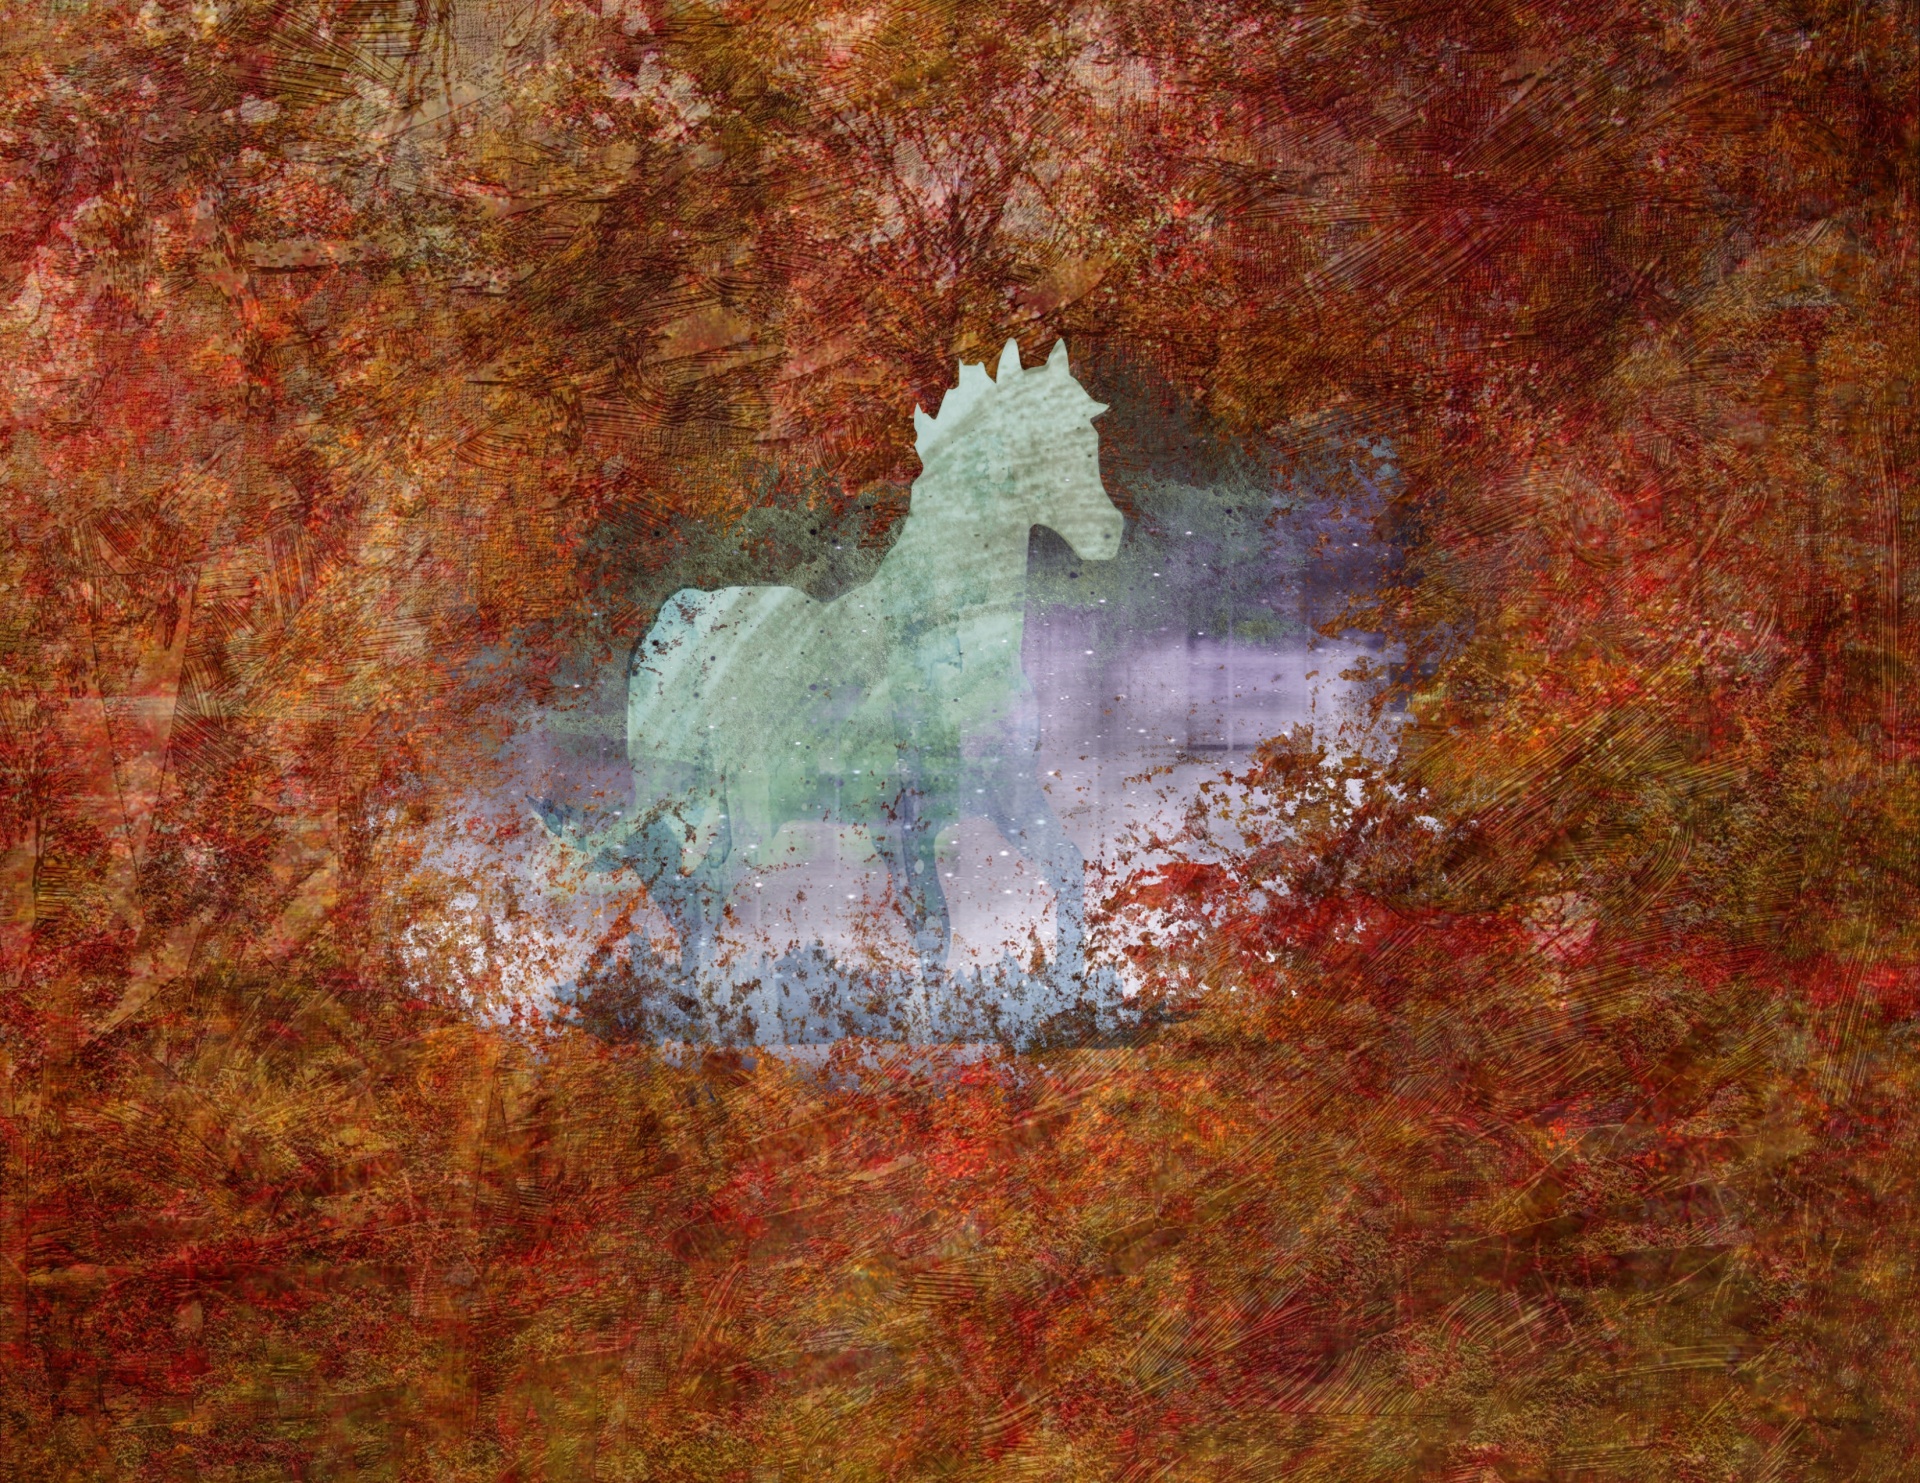 Cavalo na floresta